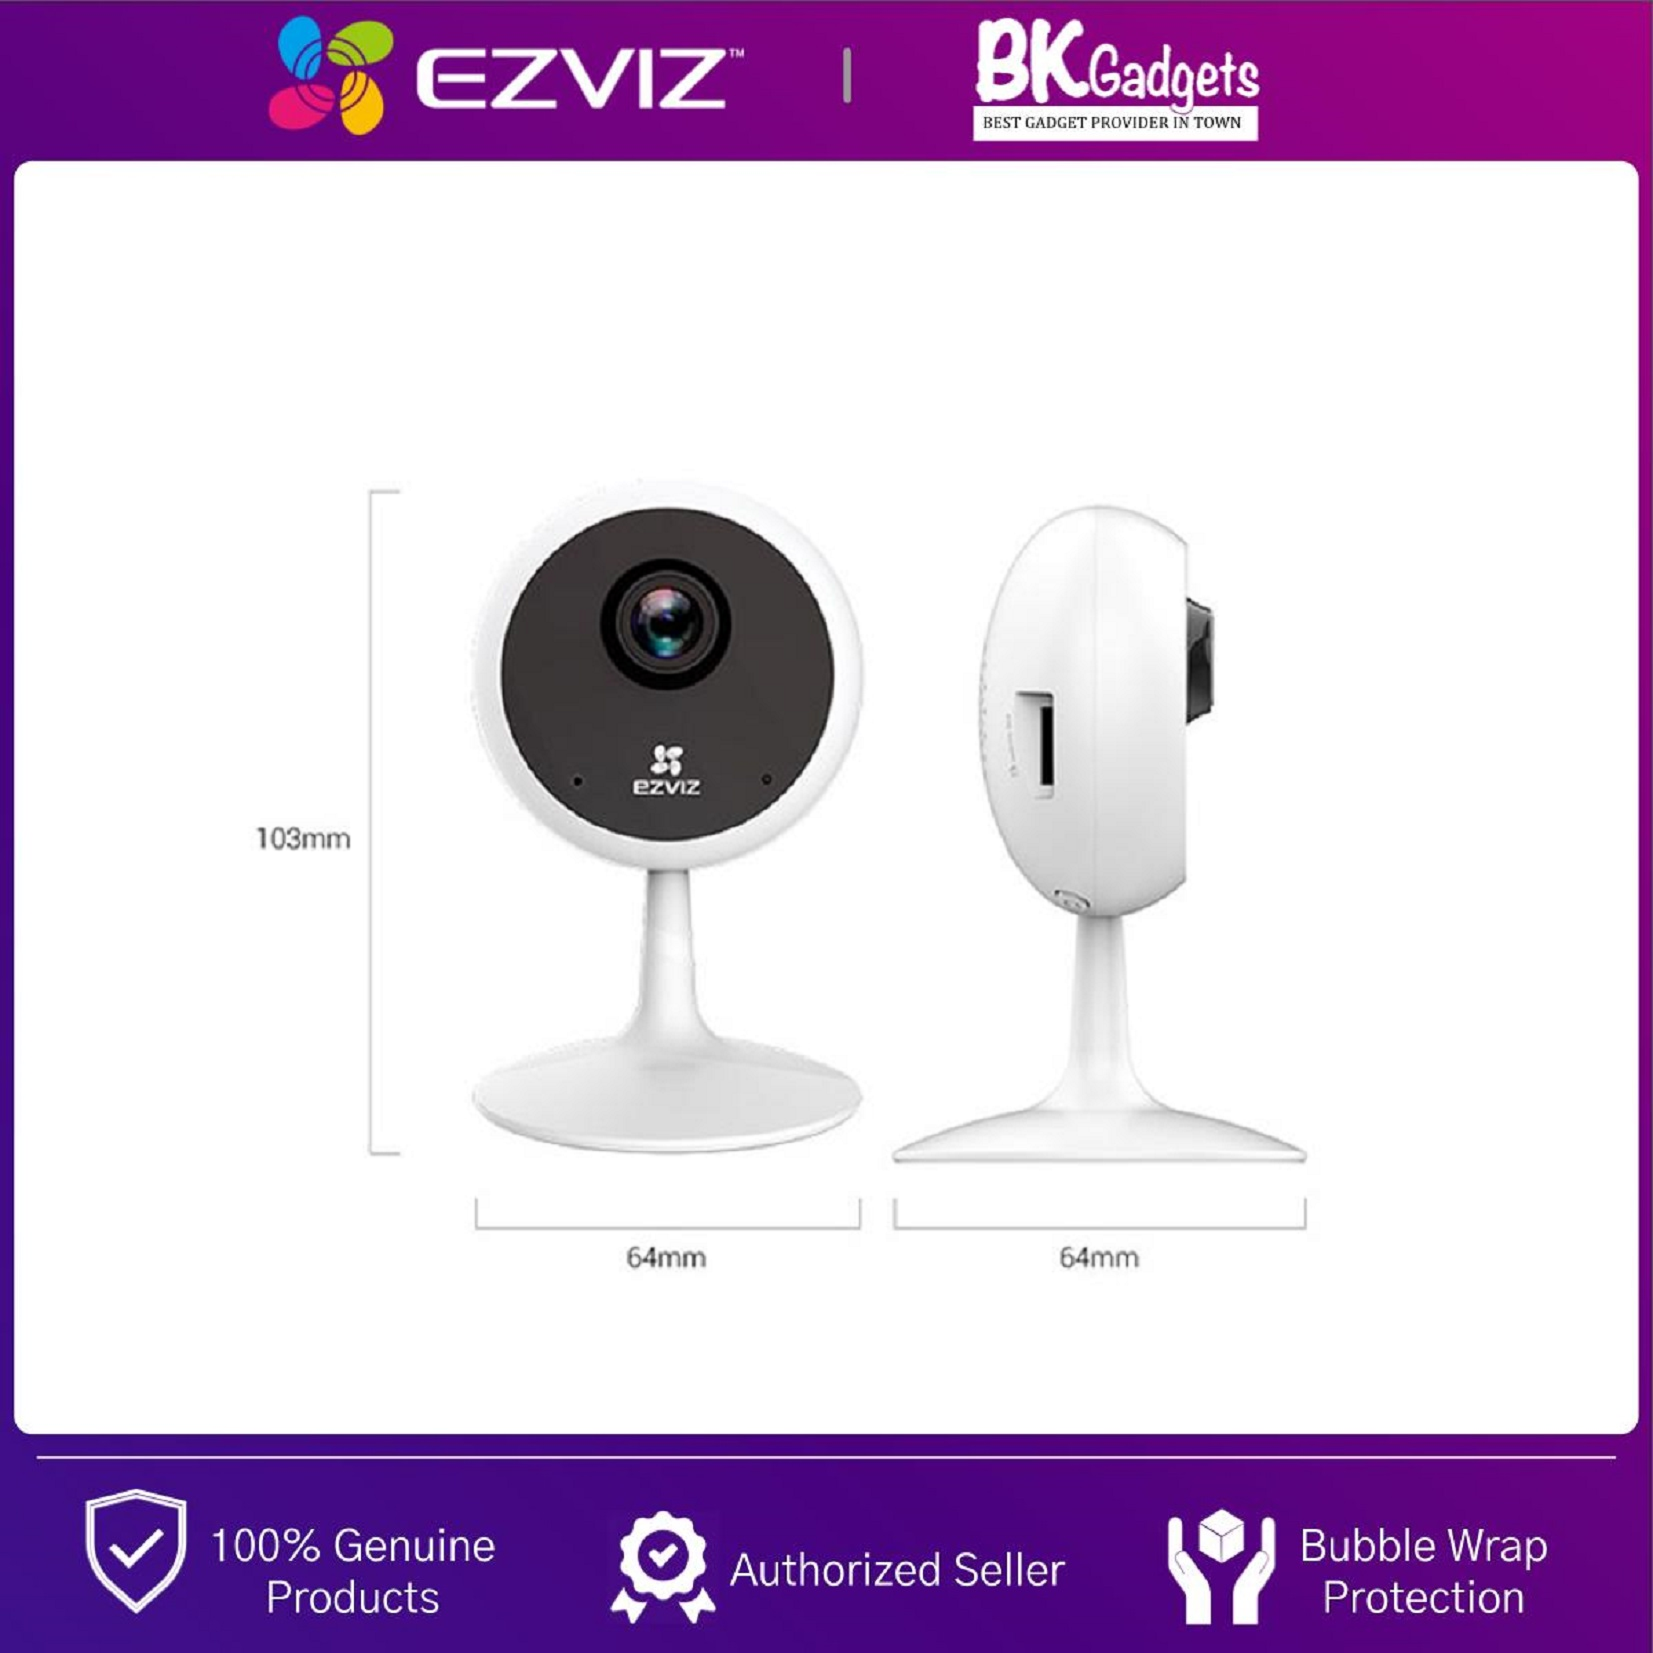 Ezviz C1C Indoor Wireless Security IP Camera - 720P | Live View | Audio Reception | Instant Alerts | Video History | Smart Home Enabled | Up to 8x Zoom